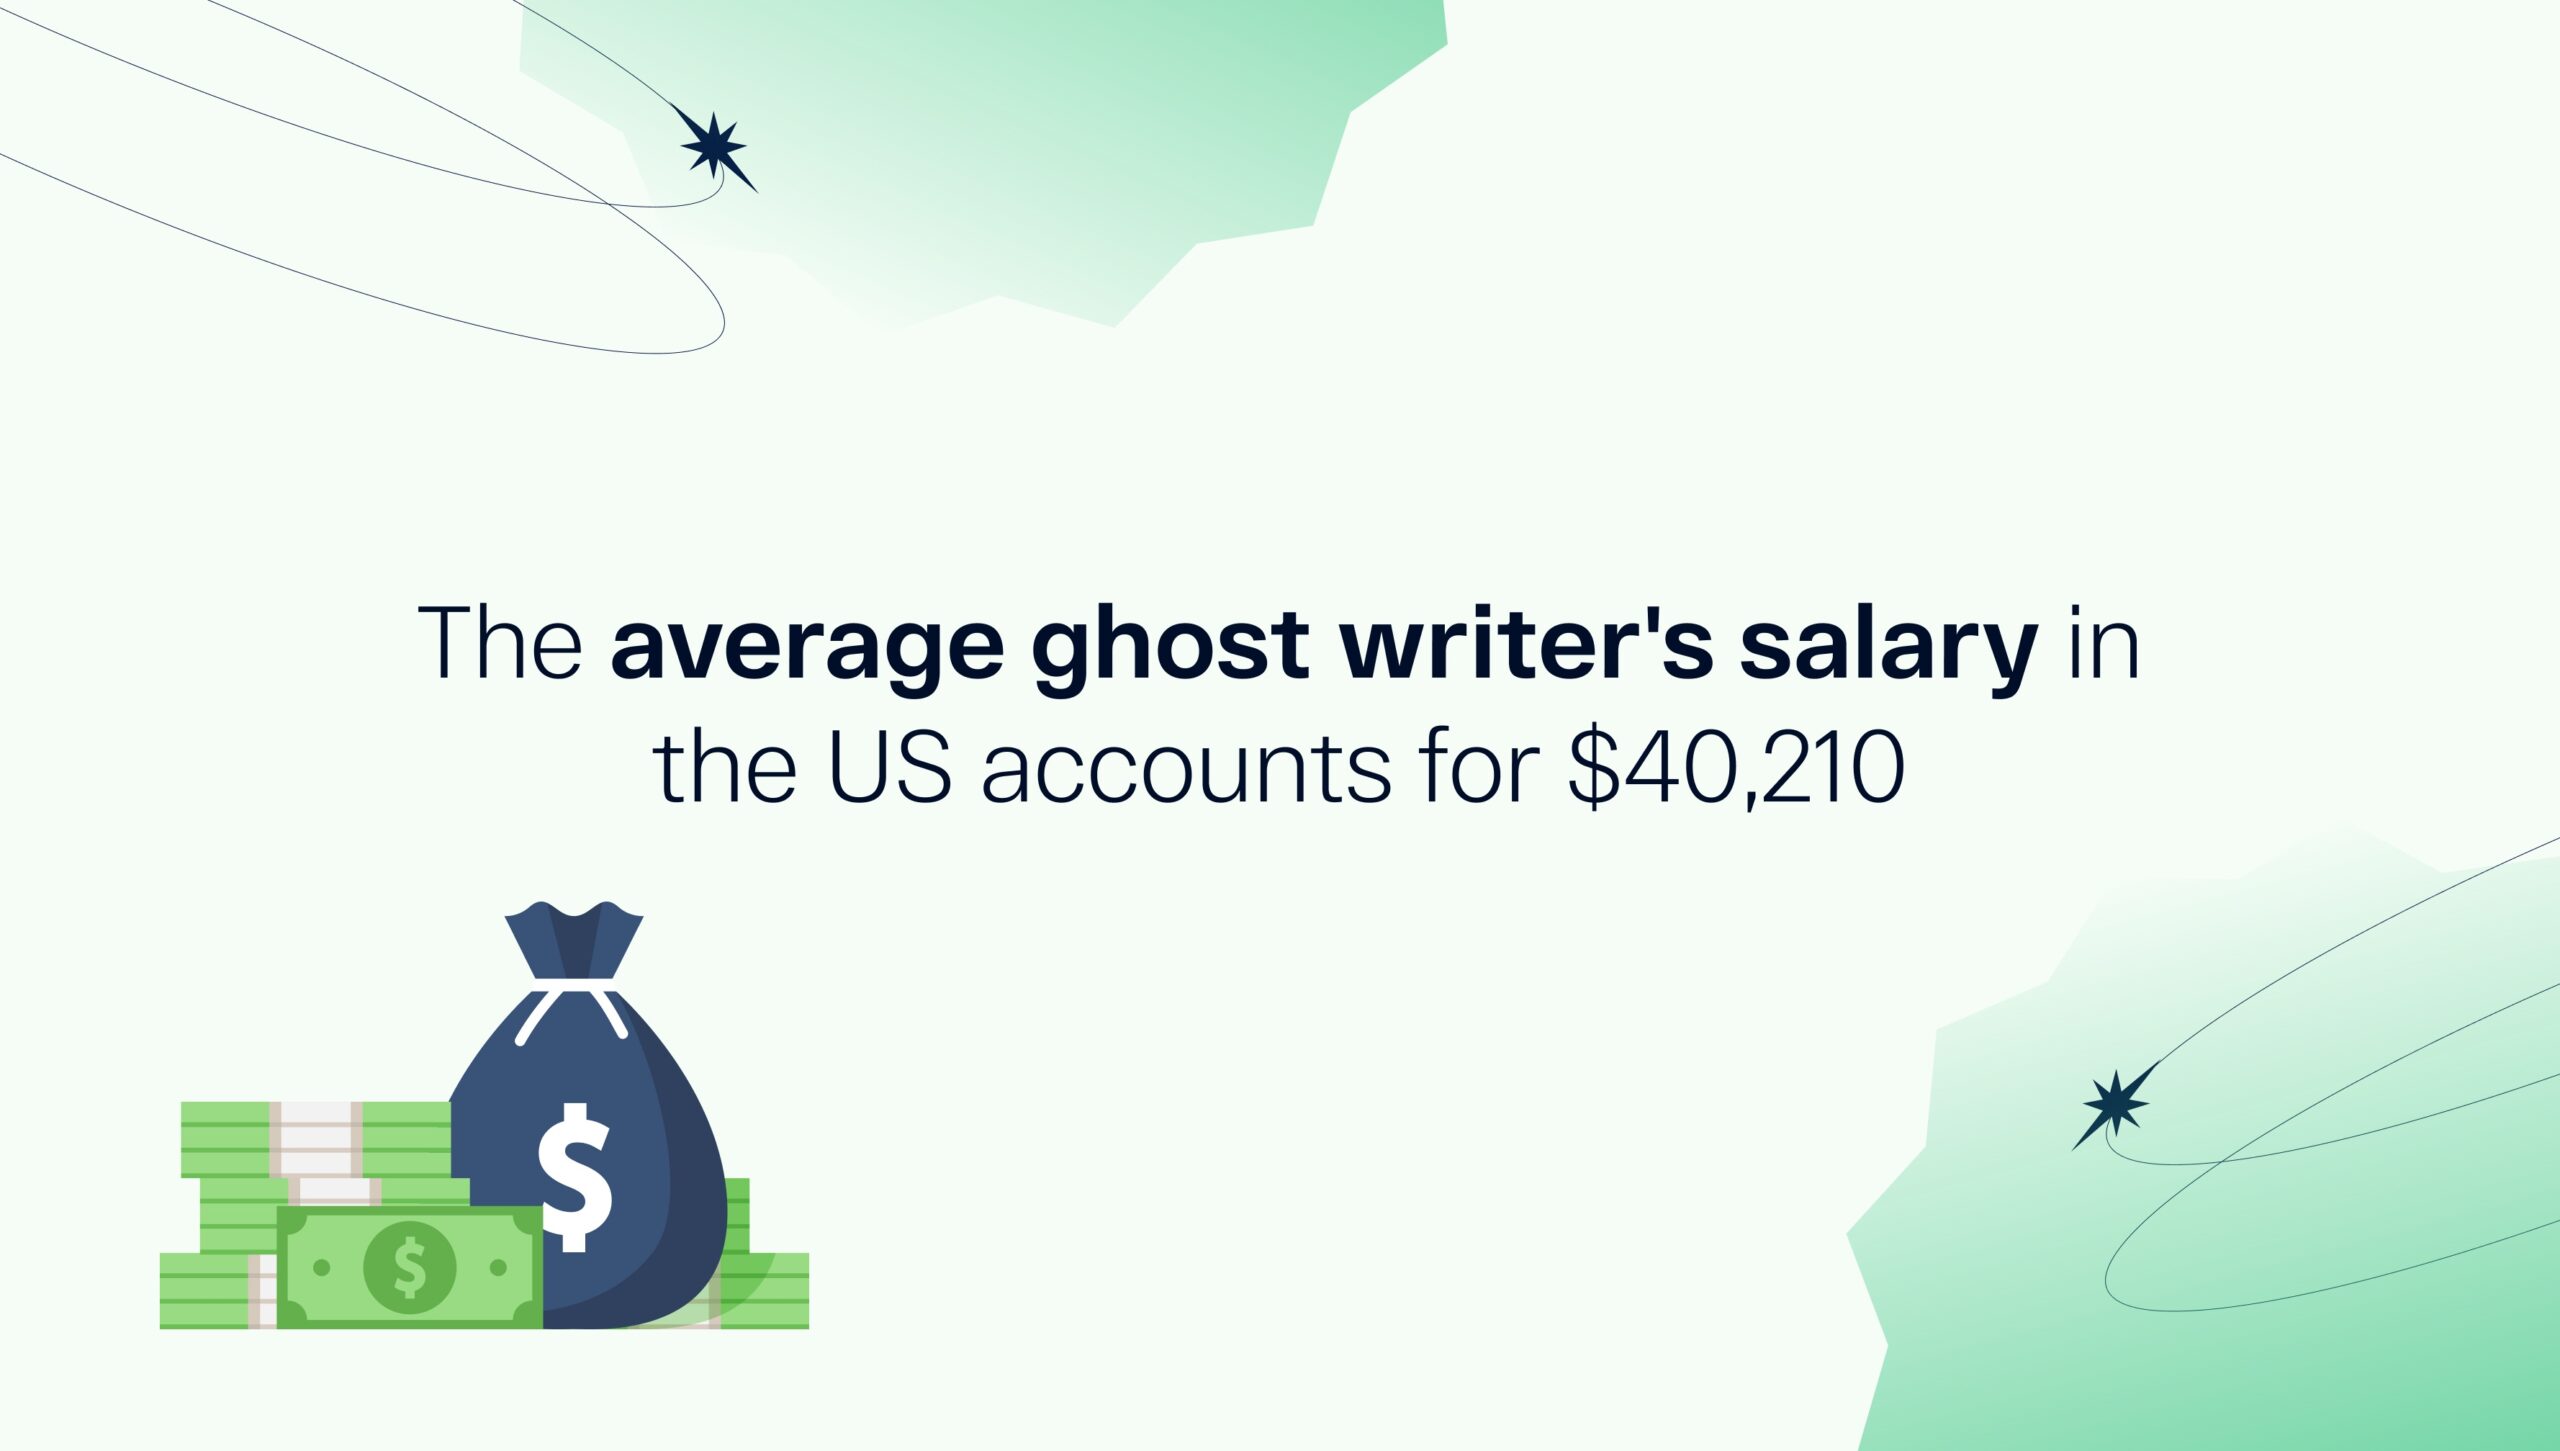 Ghostwriter's salary